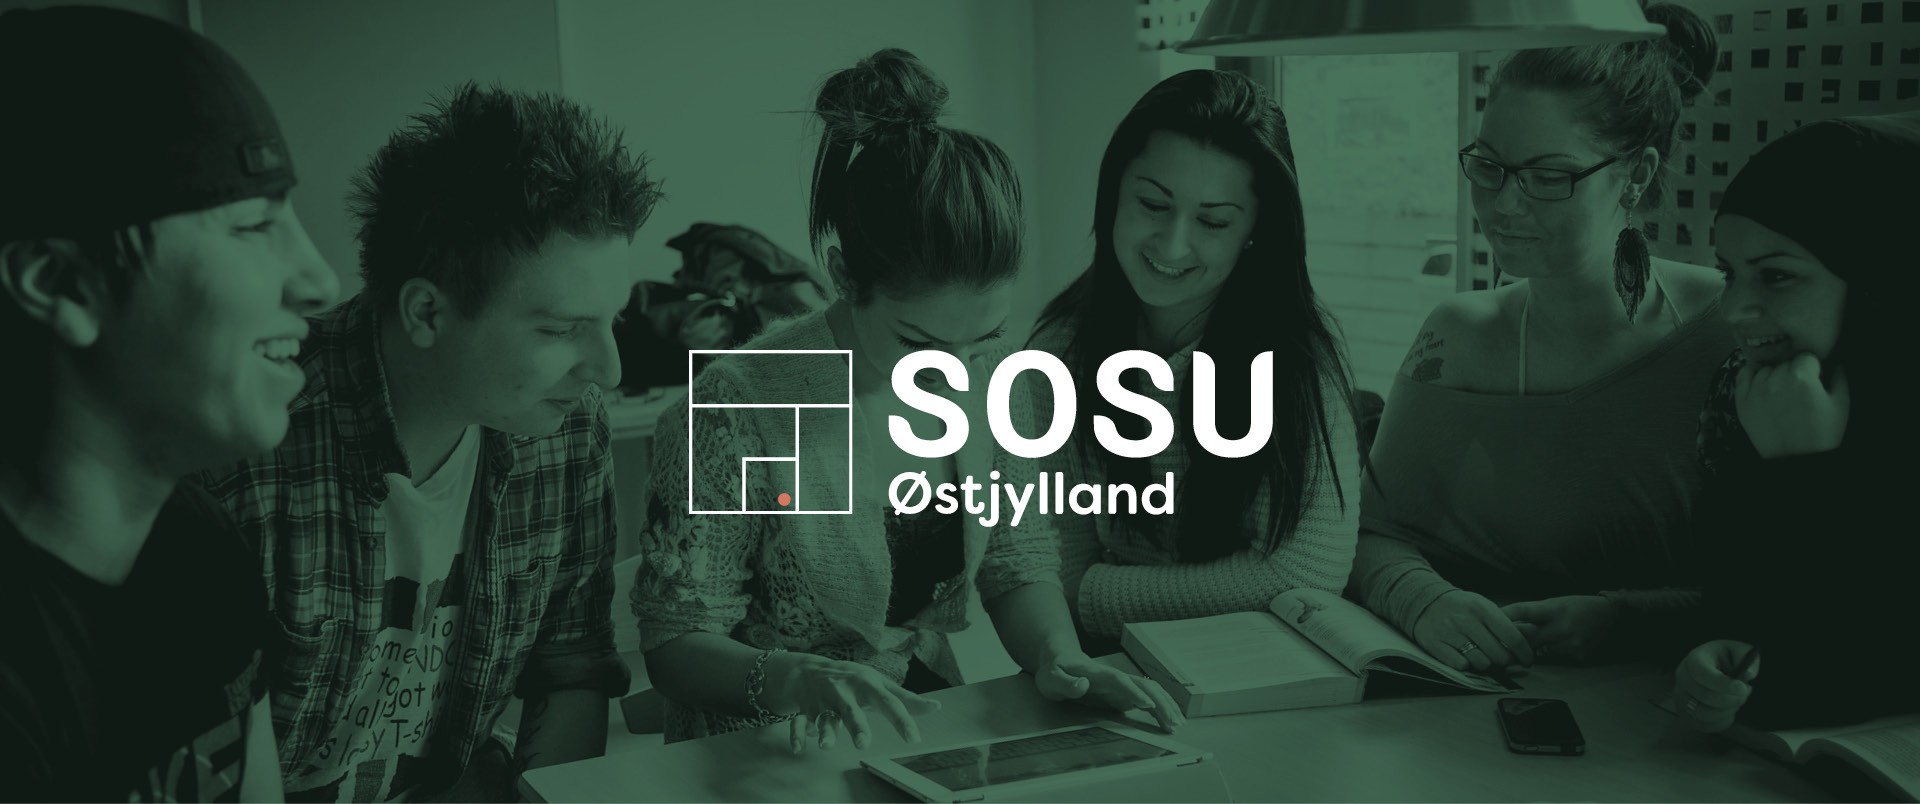 SOSU Østjylland - udannelsesinstitution - Visuel identitet - Kaffekop